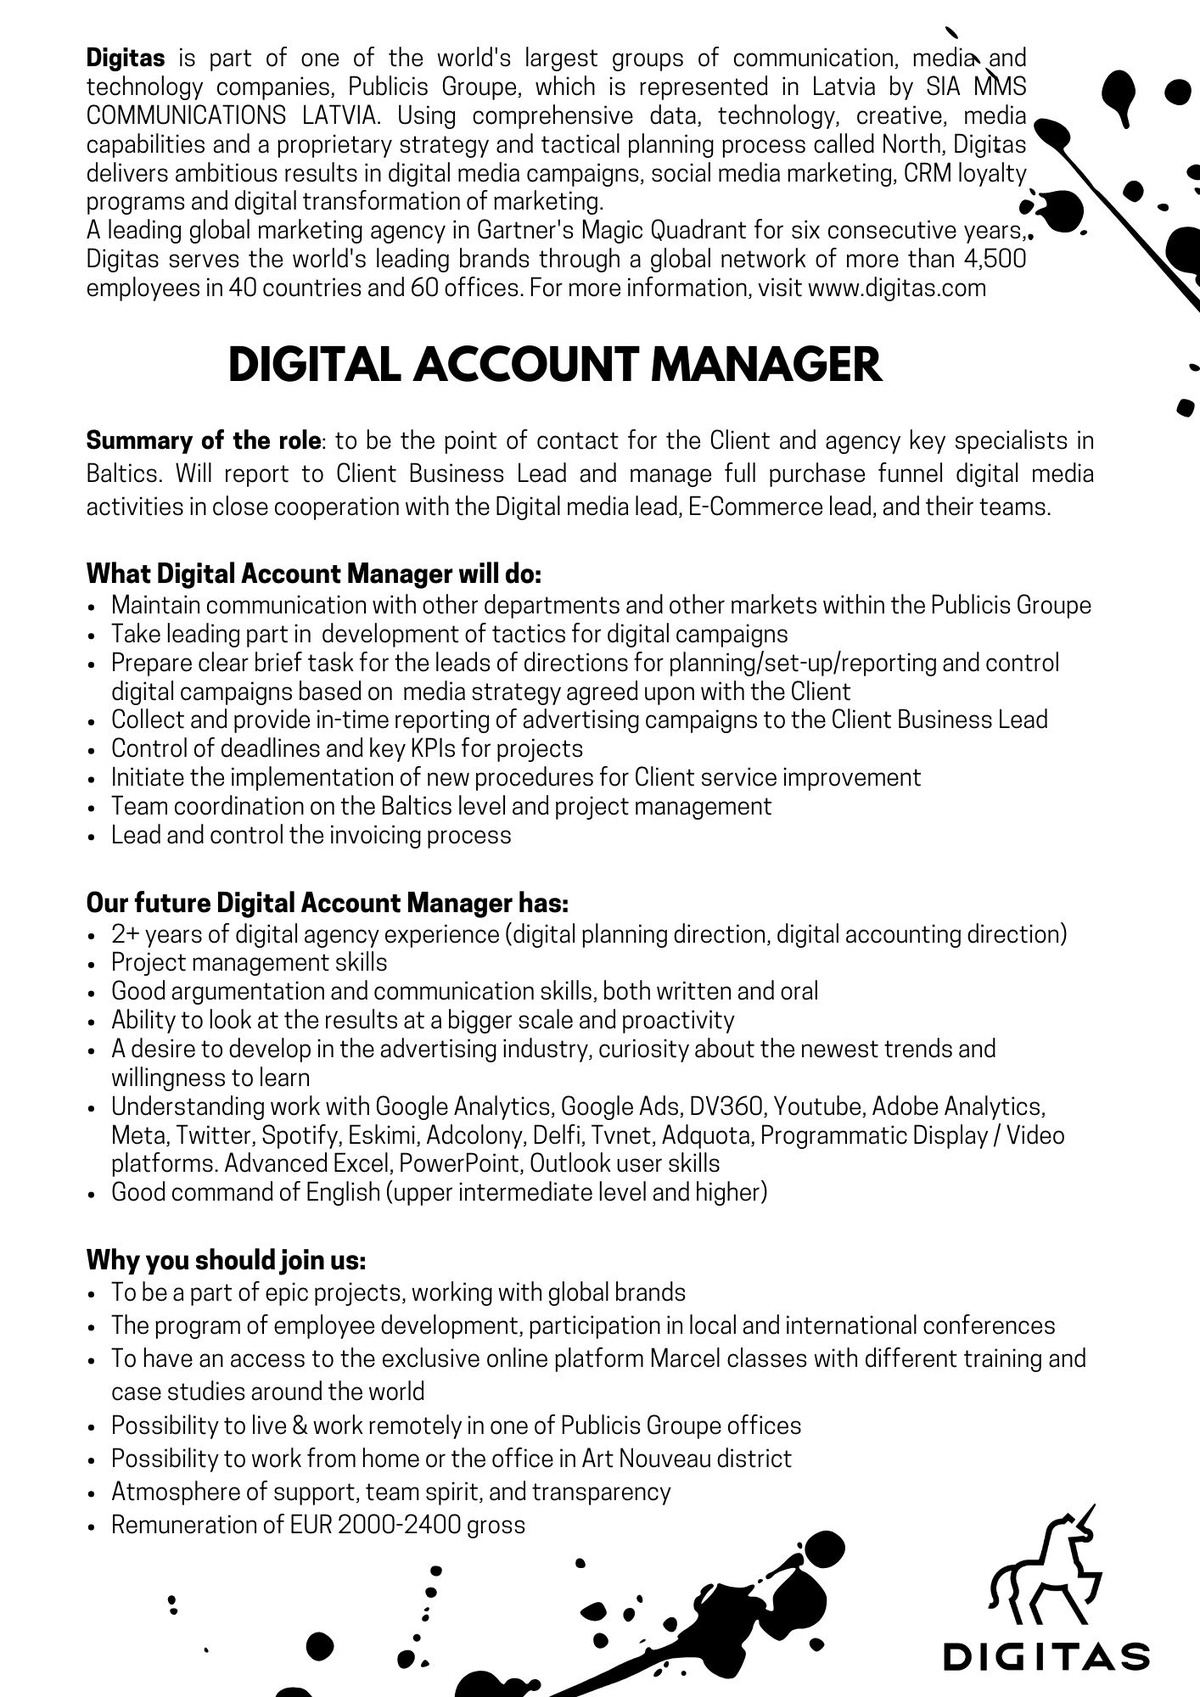 SAS "Manpower Lit" filiāle "Manpower Lit" Digital Account Manager